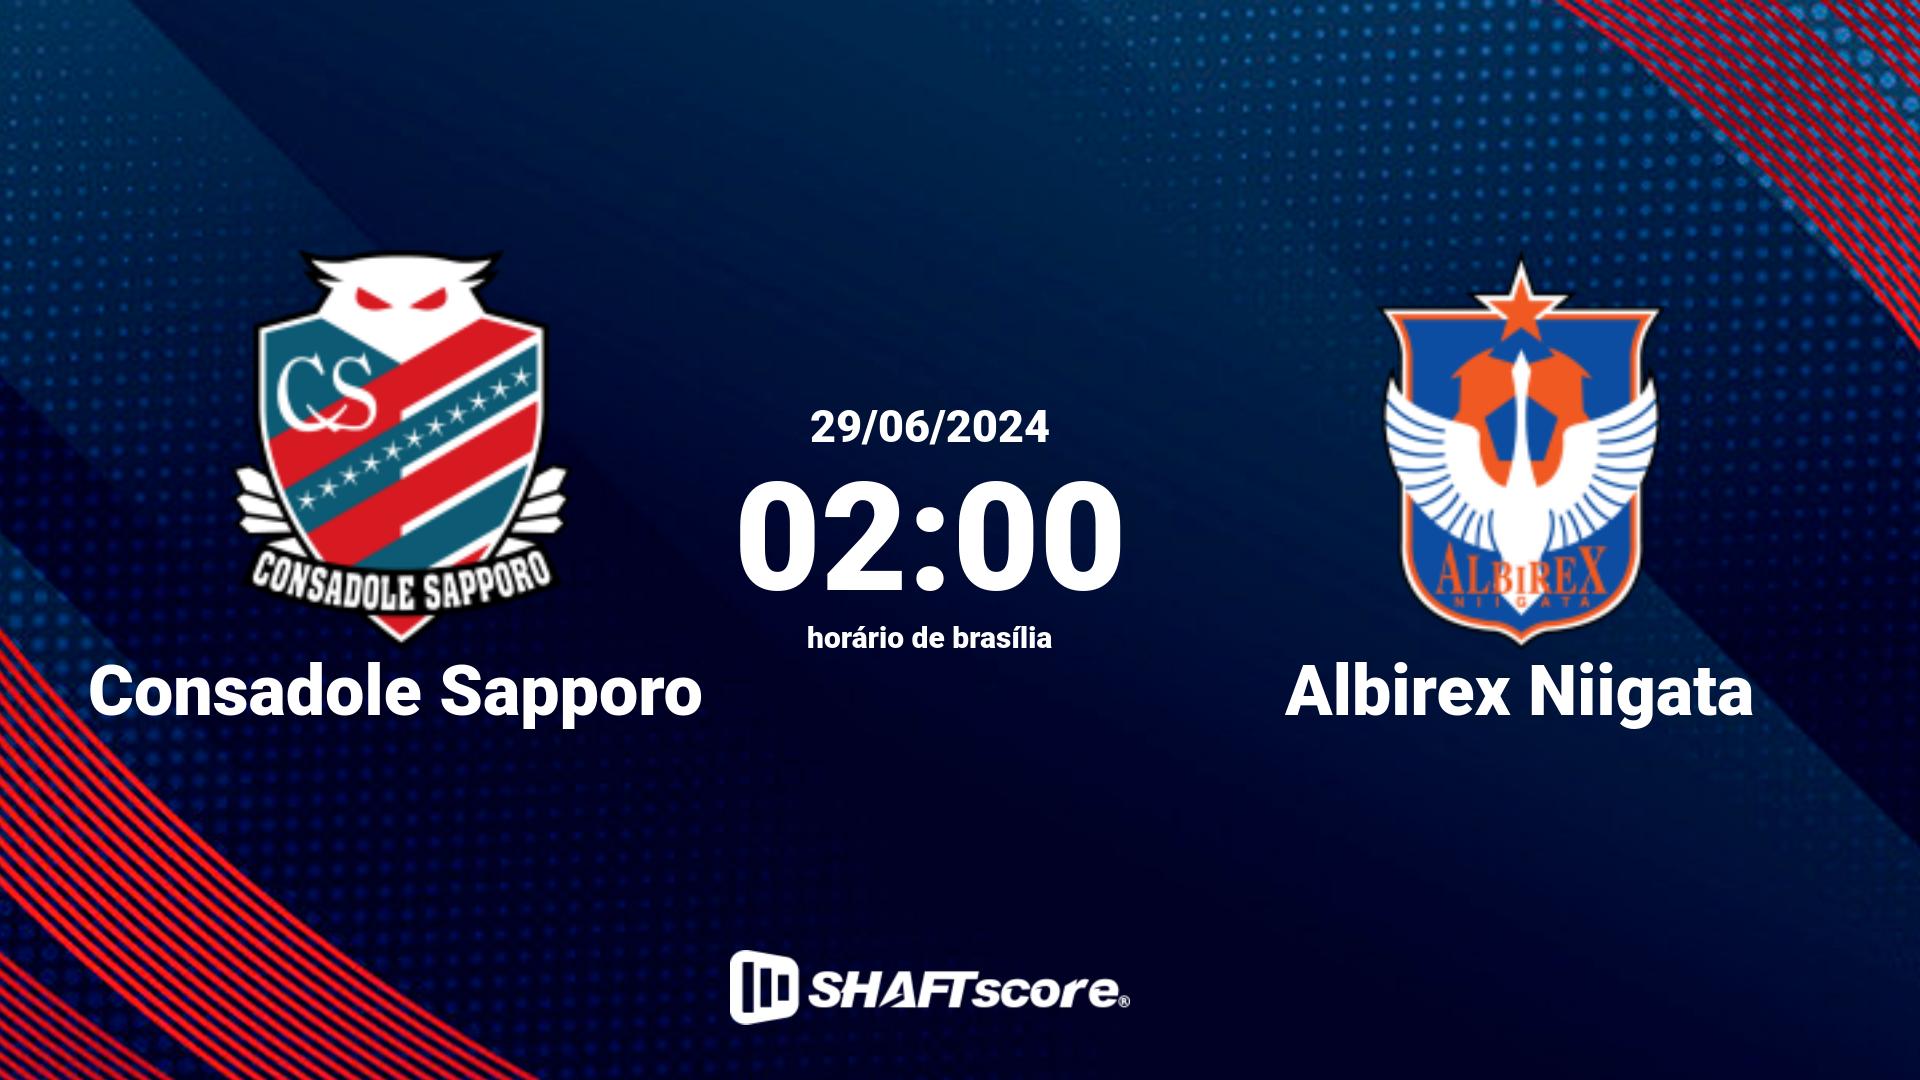 Estatísticas do jogo Consadole Sapporo vs Albirex Niigata 29.06 02:00